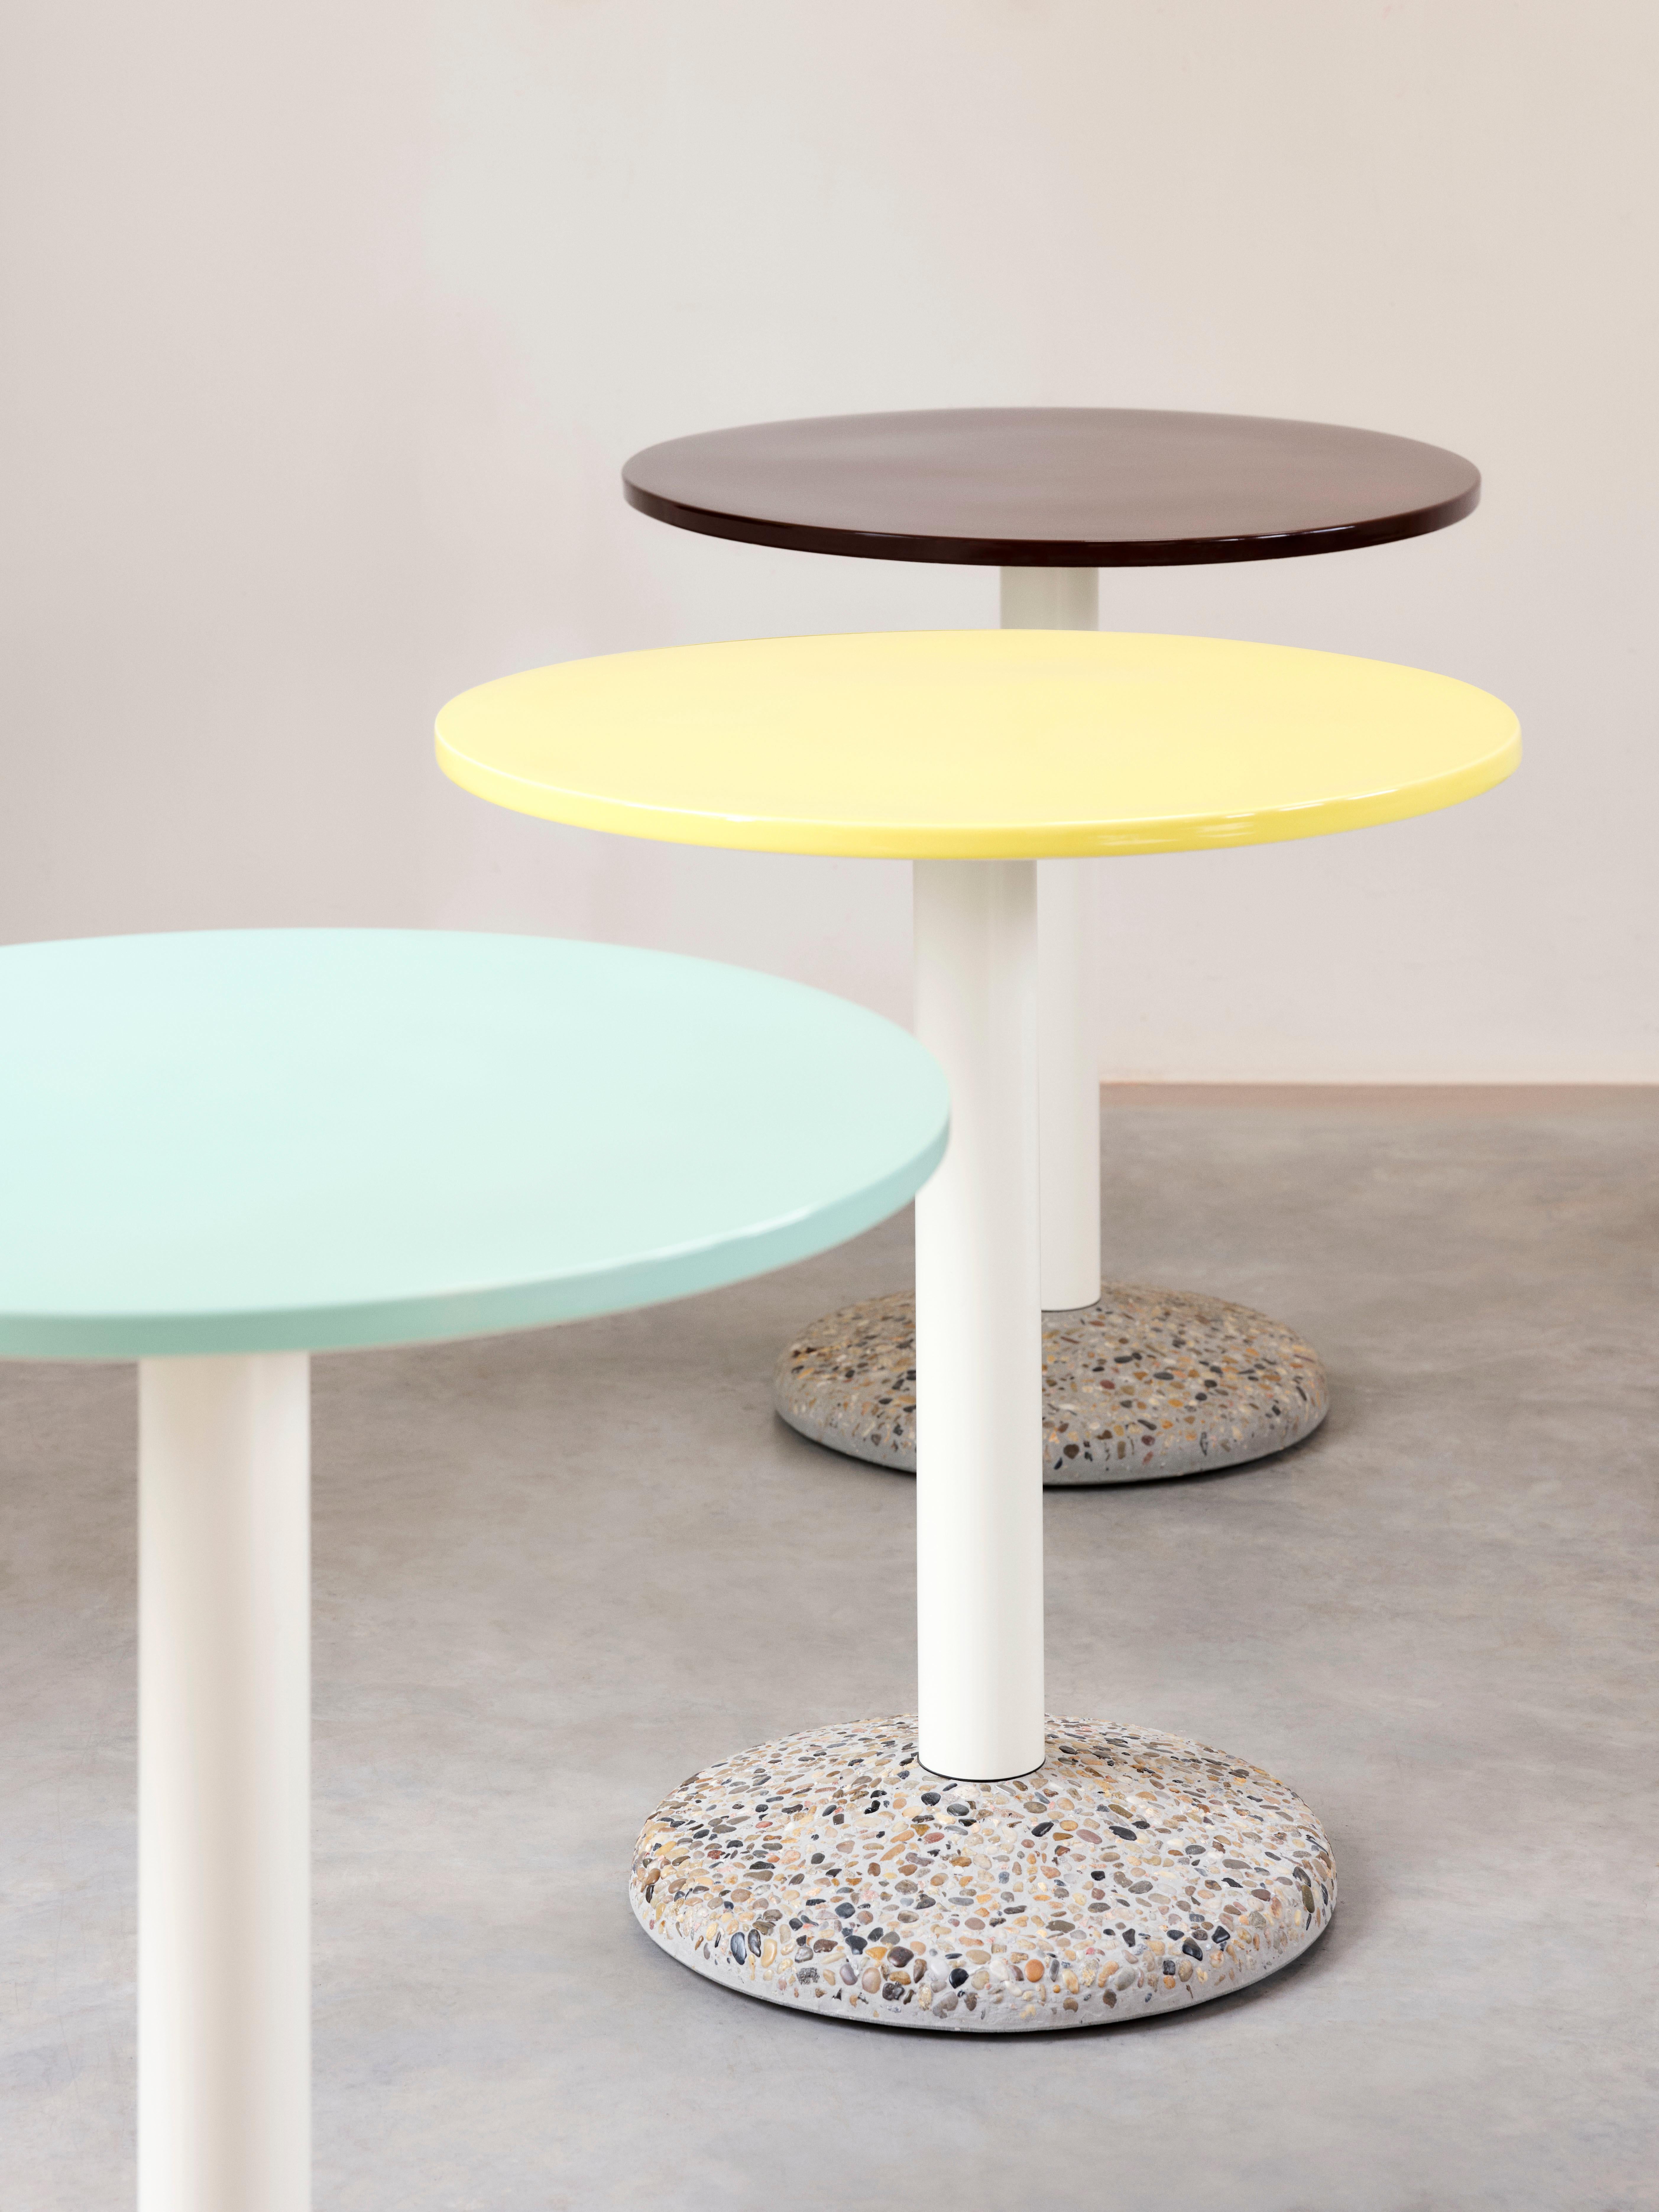 Scandinavian Modern Ceramic Table Ø70, Outdoor-Bright Yellow Porcelain-by Muller Van Severen for Hay For Sale